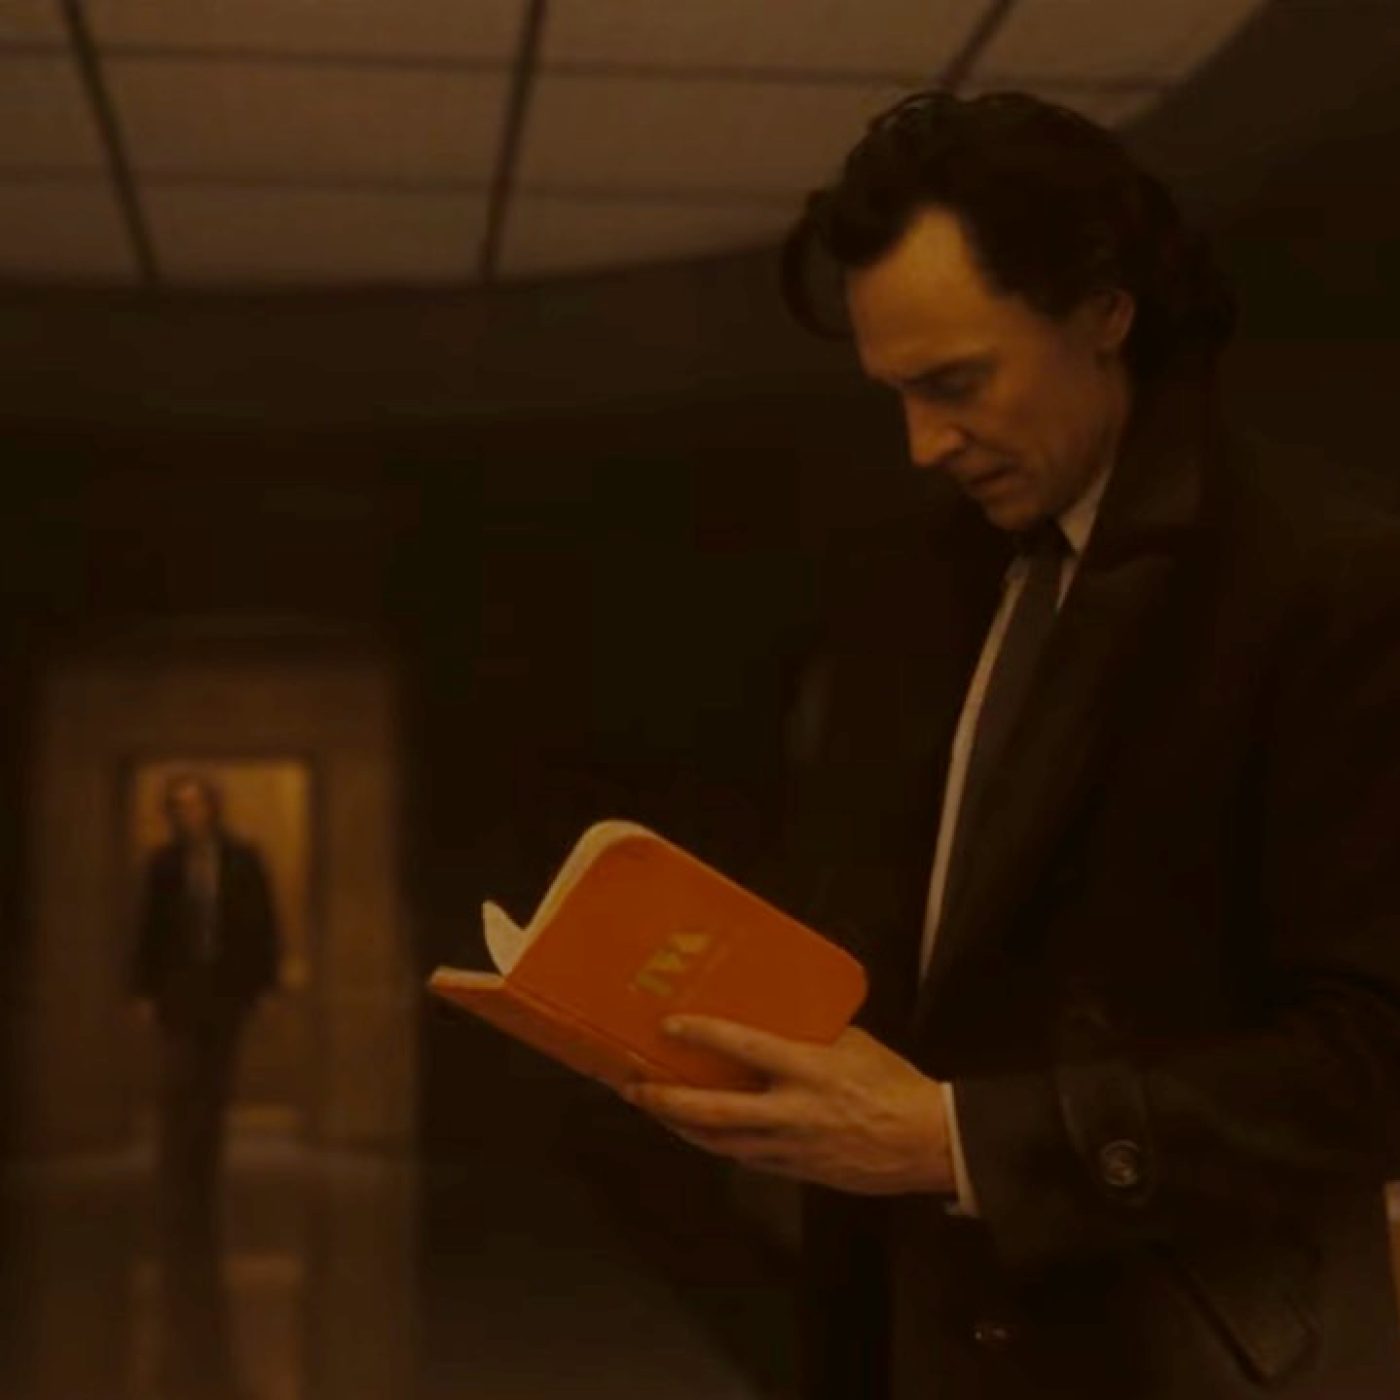 Marvel Studios' Loki Season 2 - Official 'Mid-Season' Trailer